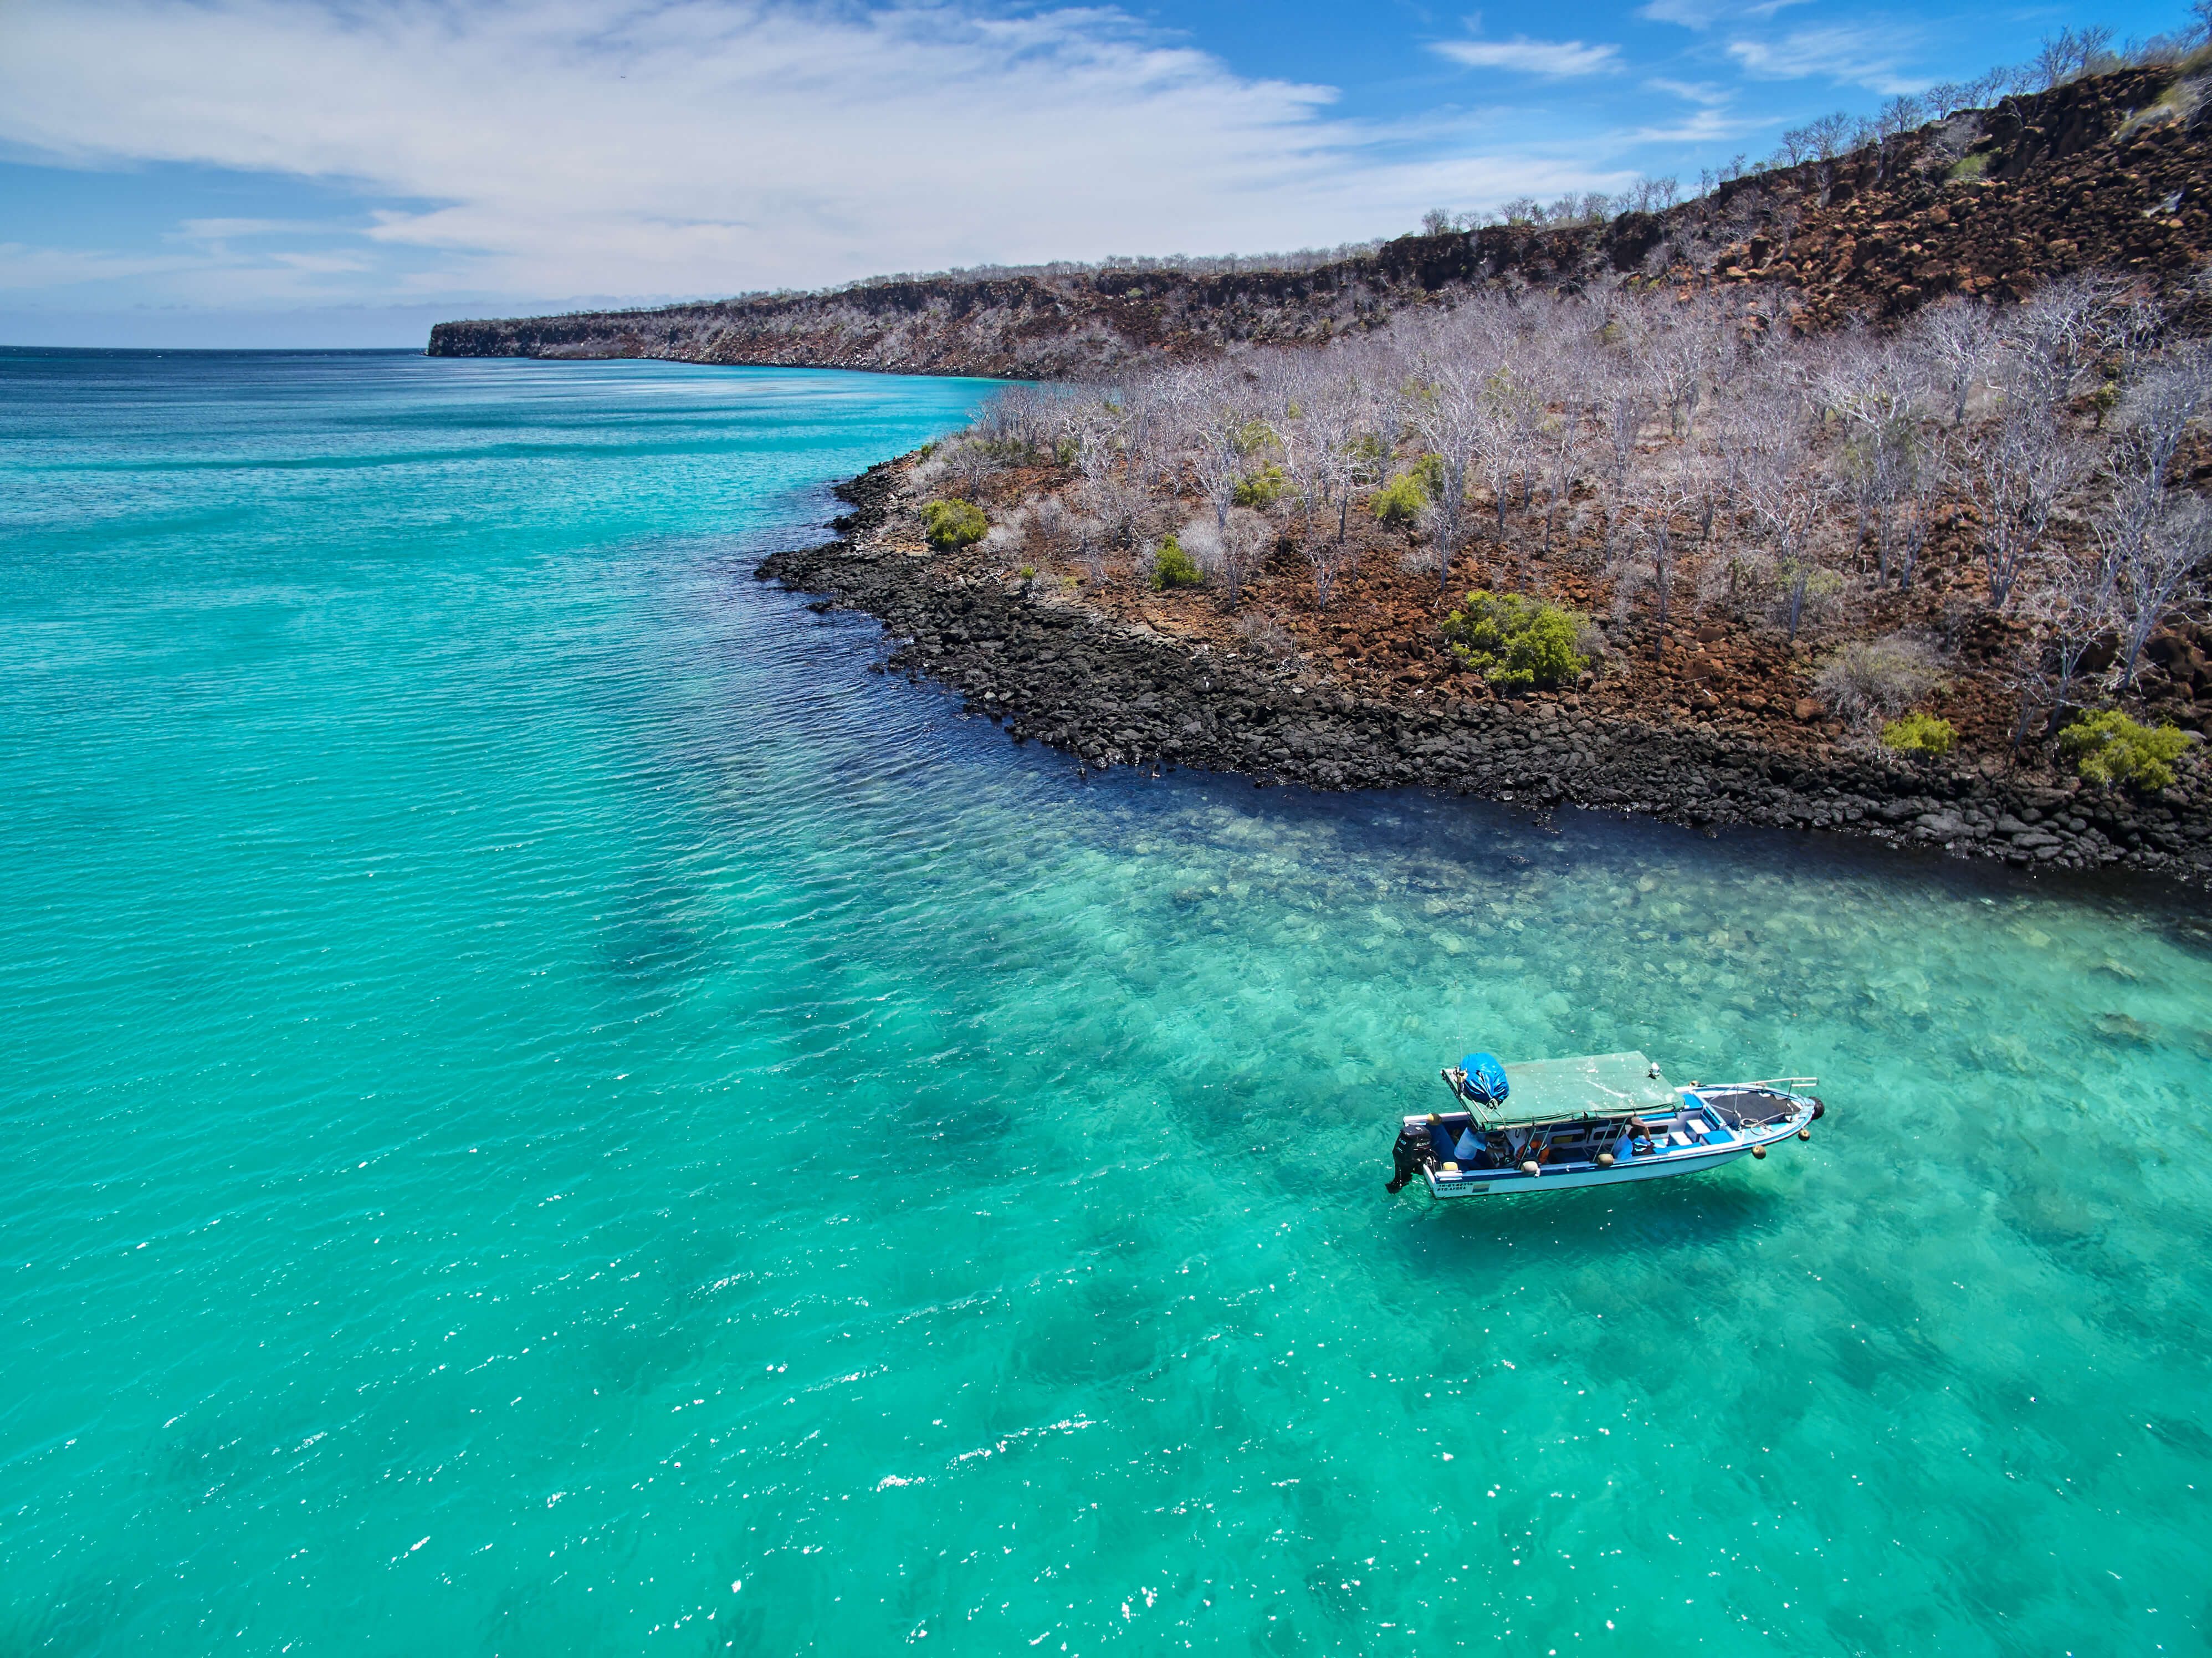 Cruising the waters around the Galapagos Islands in Ecuador